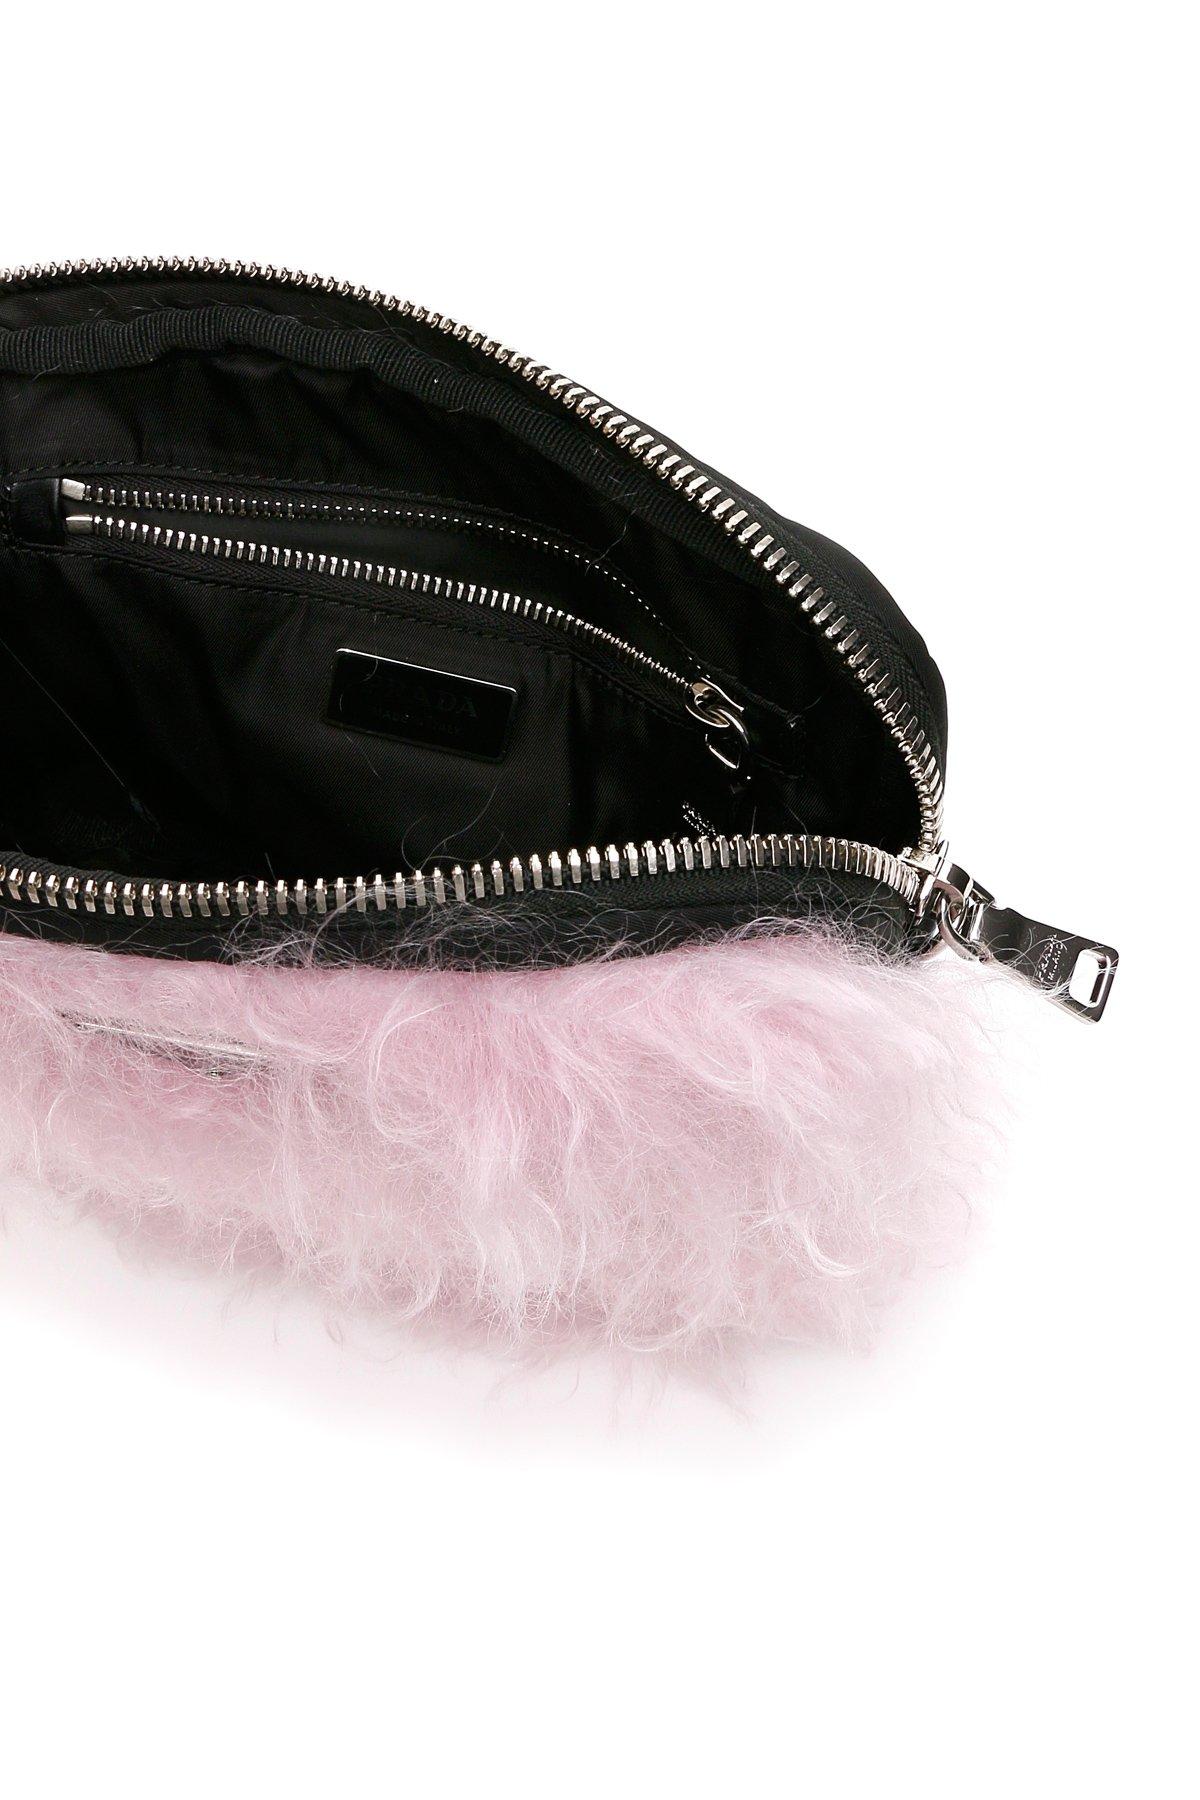 Prada Furry Mini Bag in Black,Pink (Pink) - Lyst